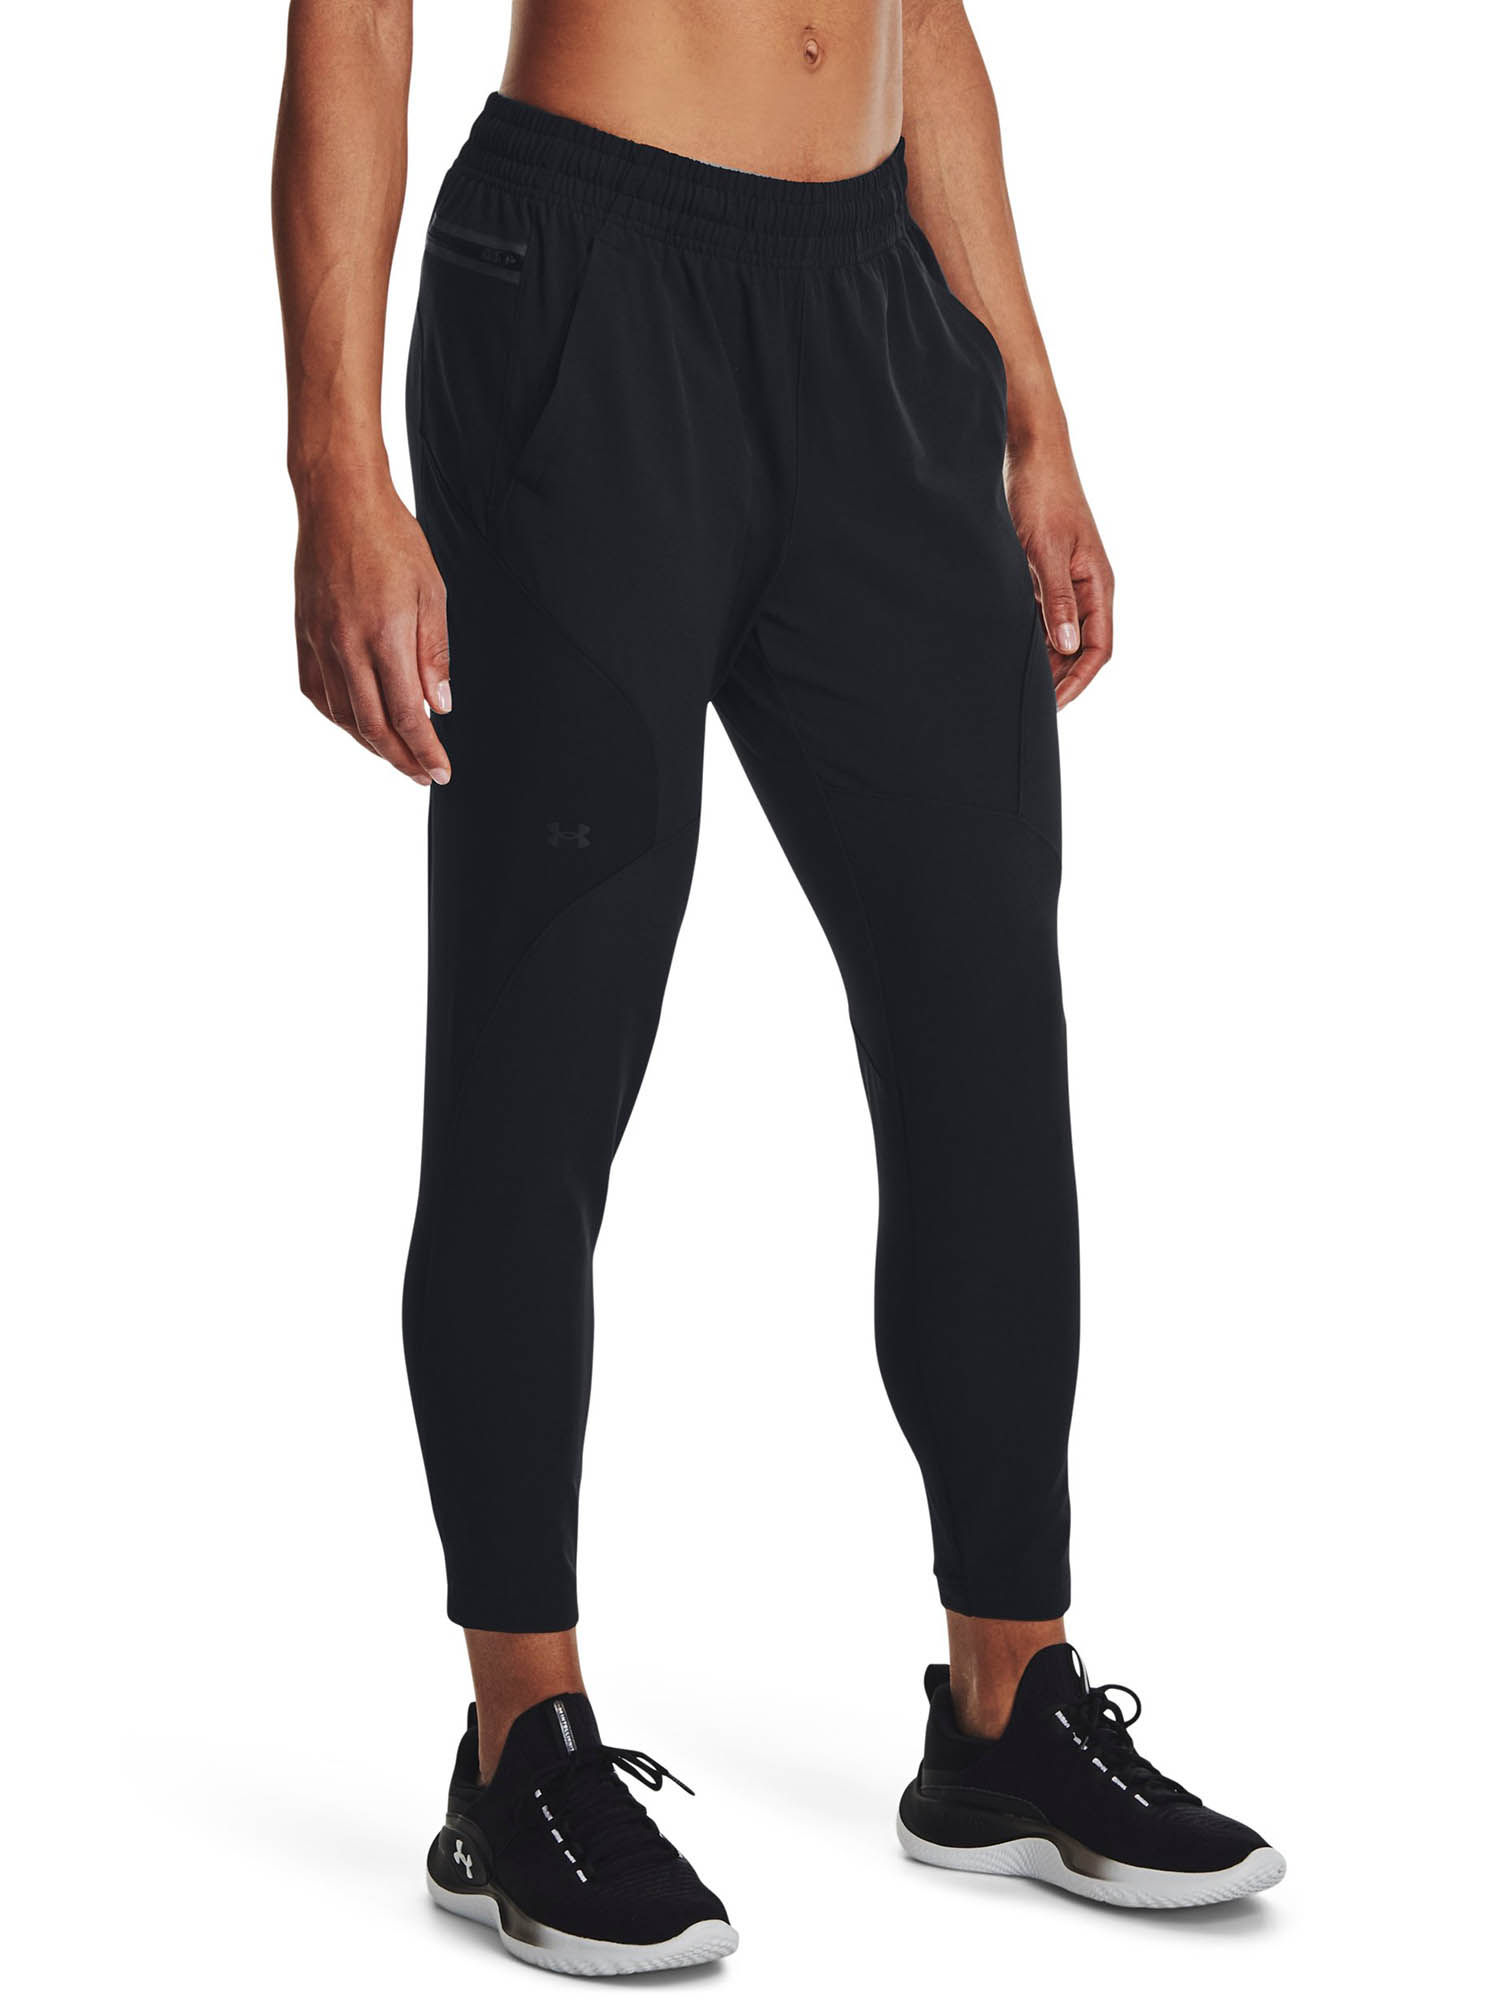 Nike Hybrid Sportswear Jogging Mens Tracksuit Pants Bottoms Slim Fit XL |  eBay